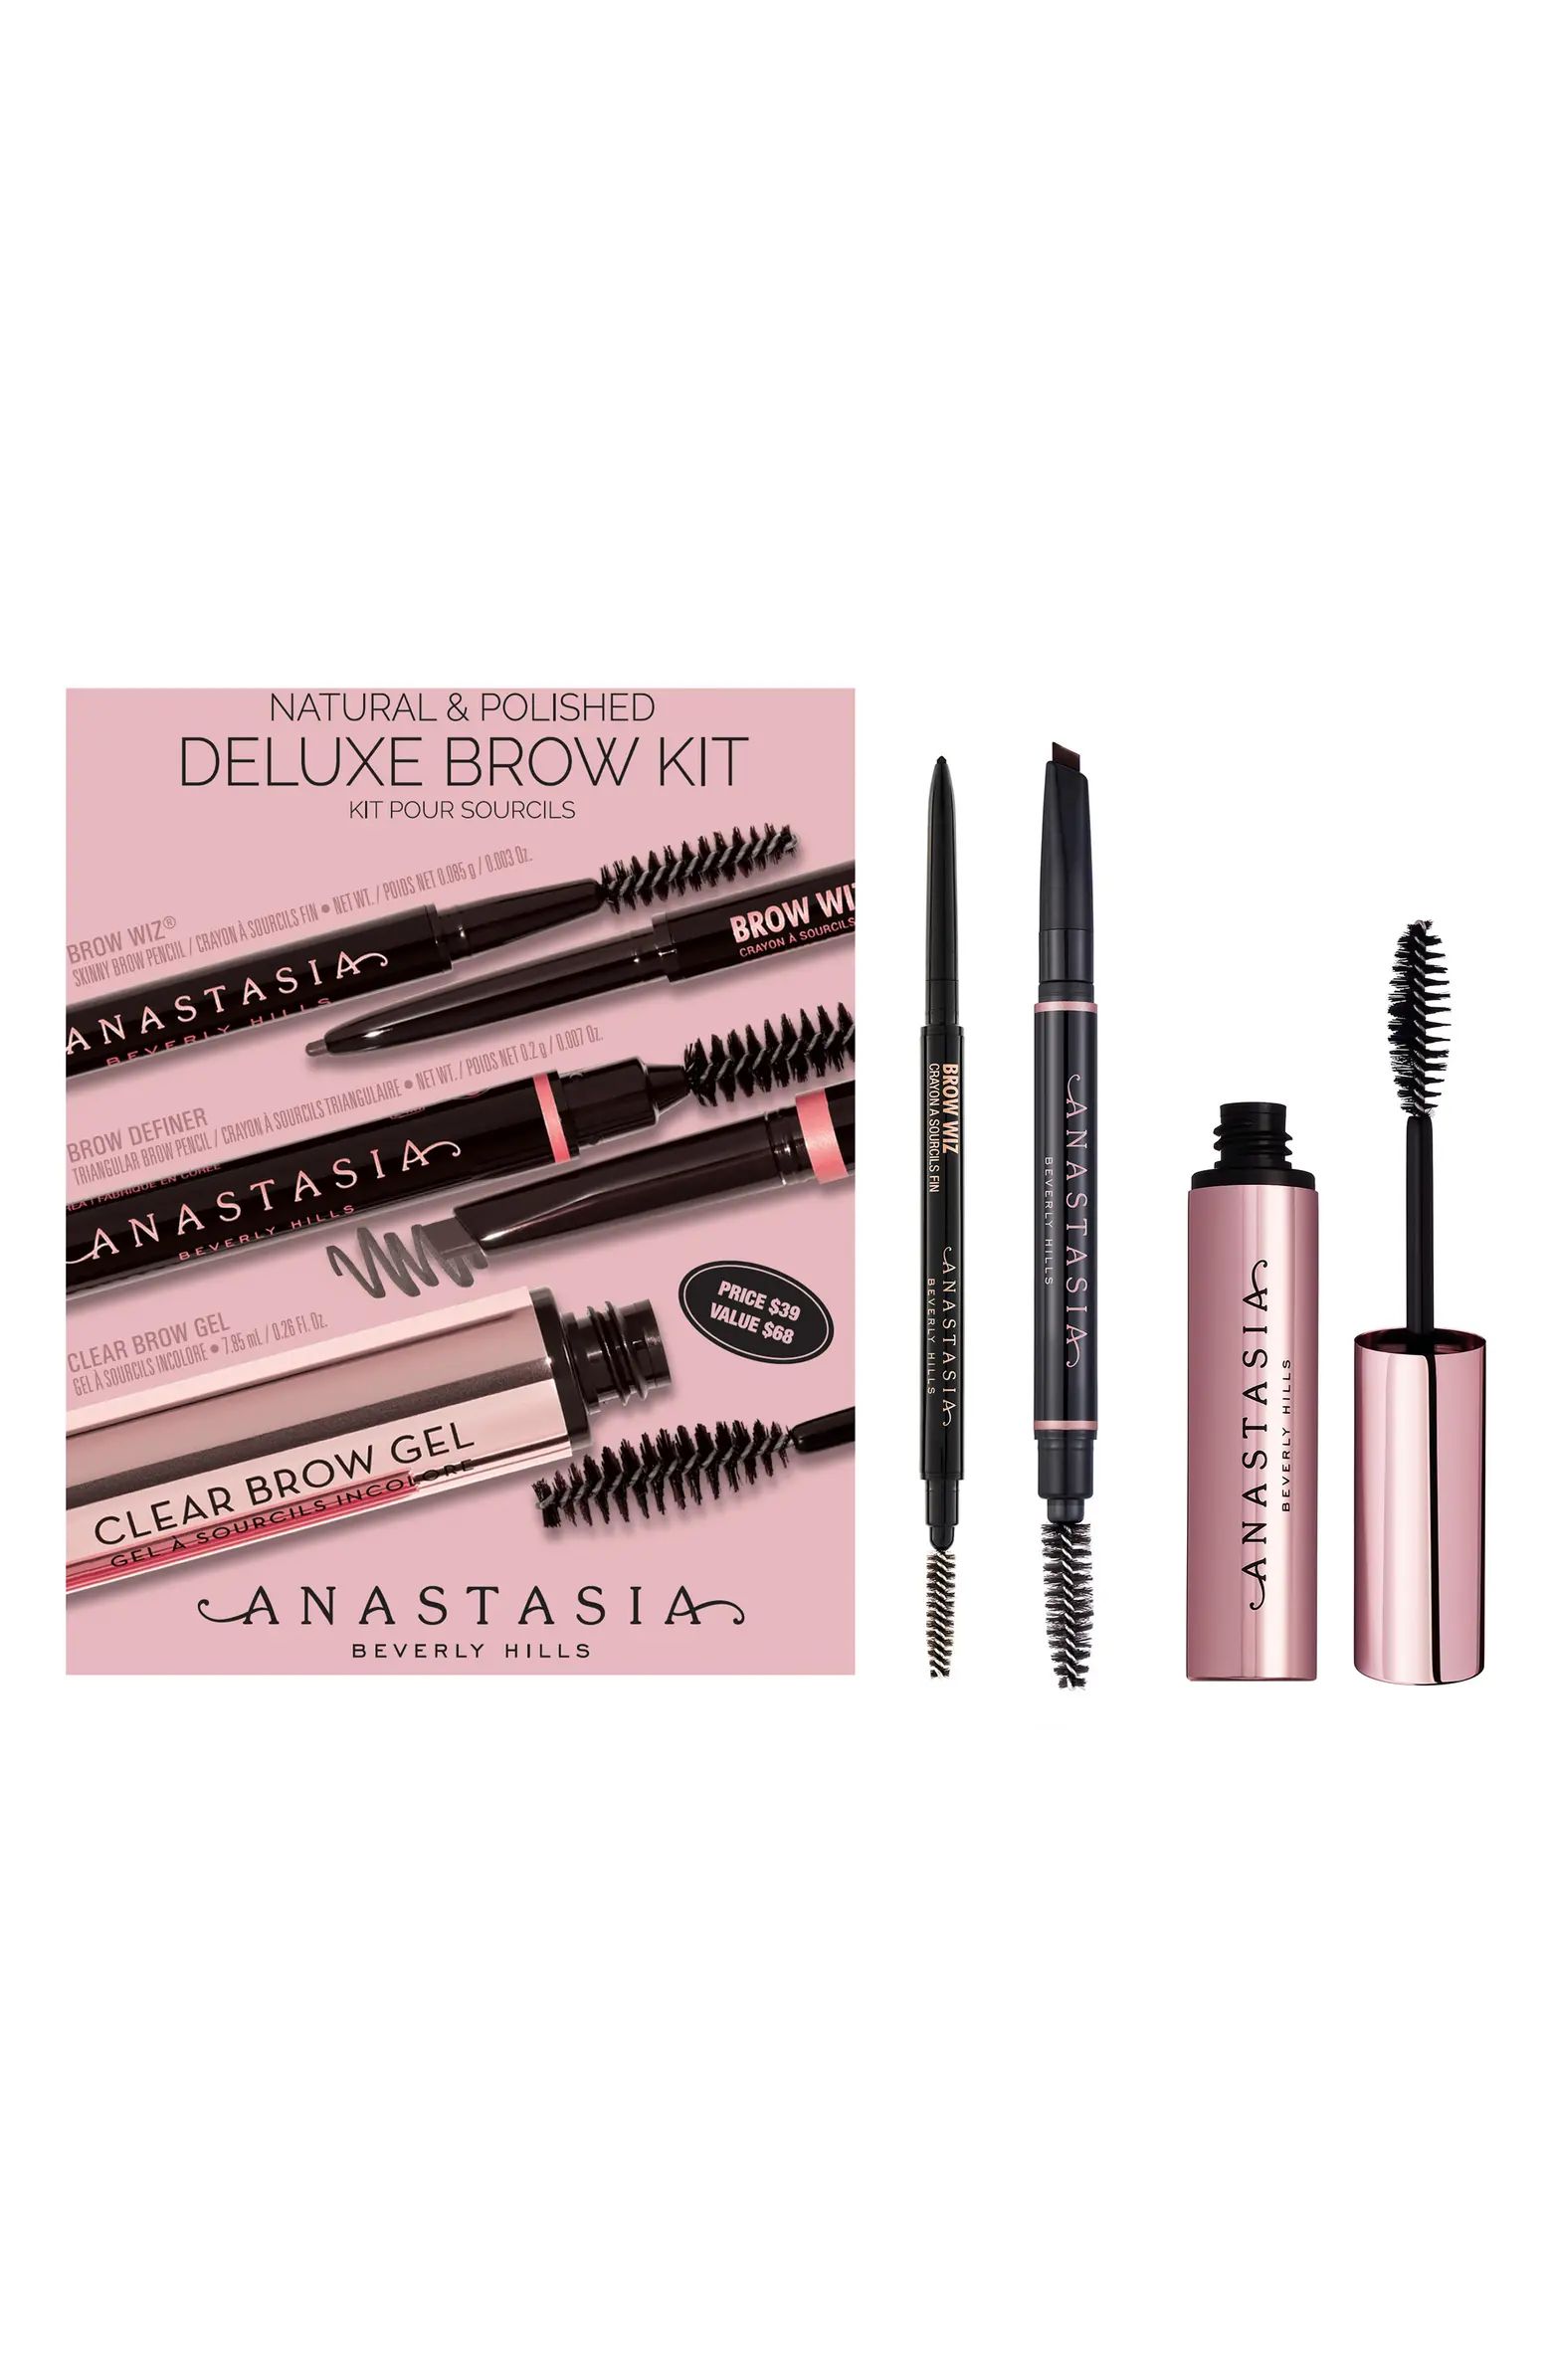 Anastasia Beverly Hills Deluxe Brow Kit $68 Value | Nordstrom | Nordstrom